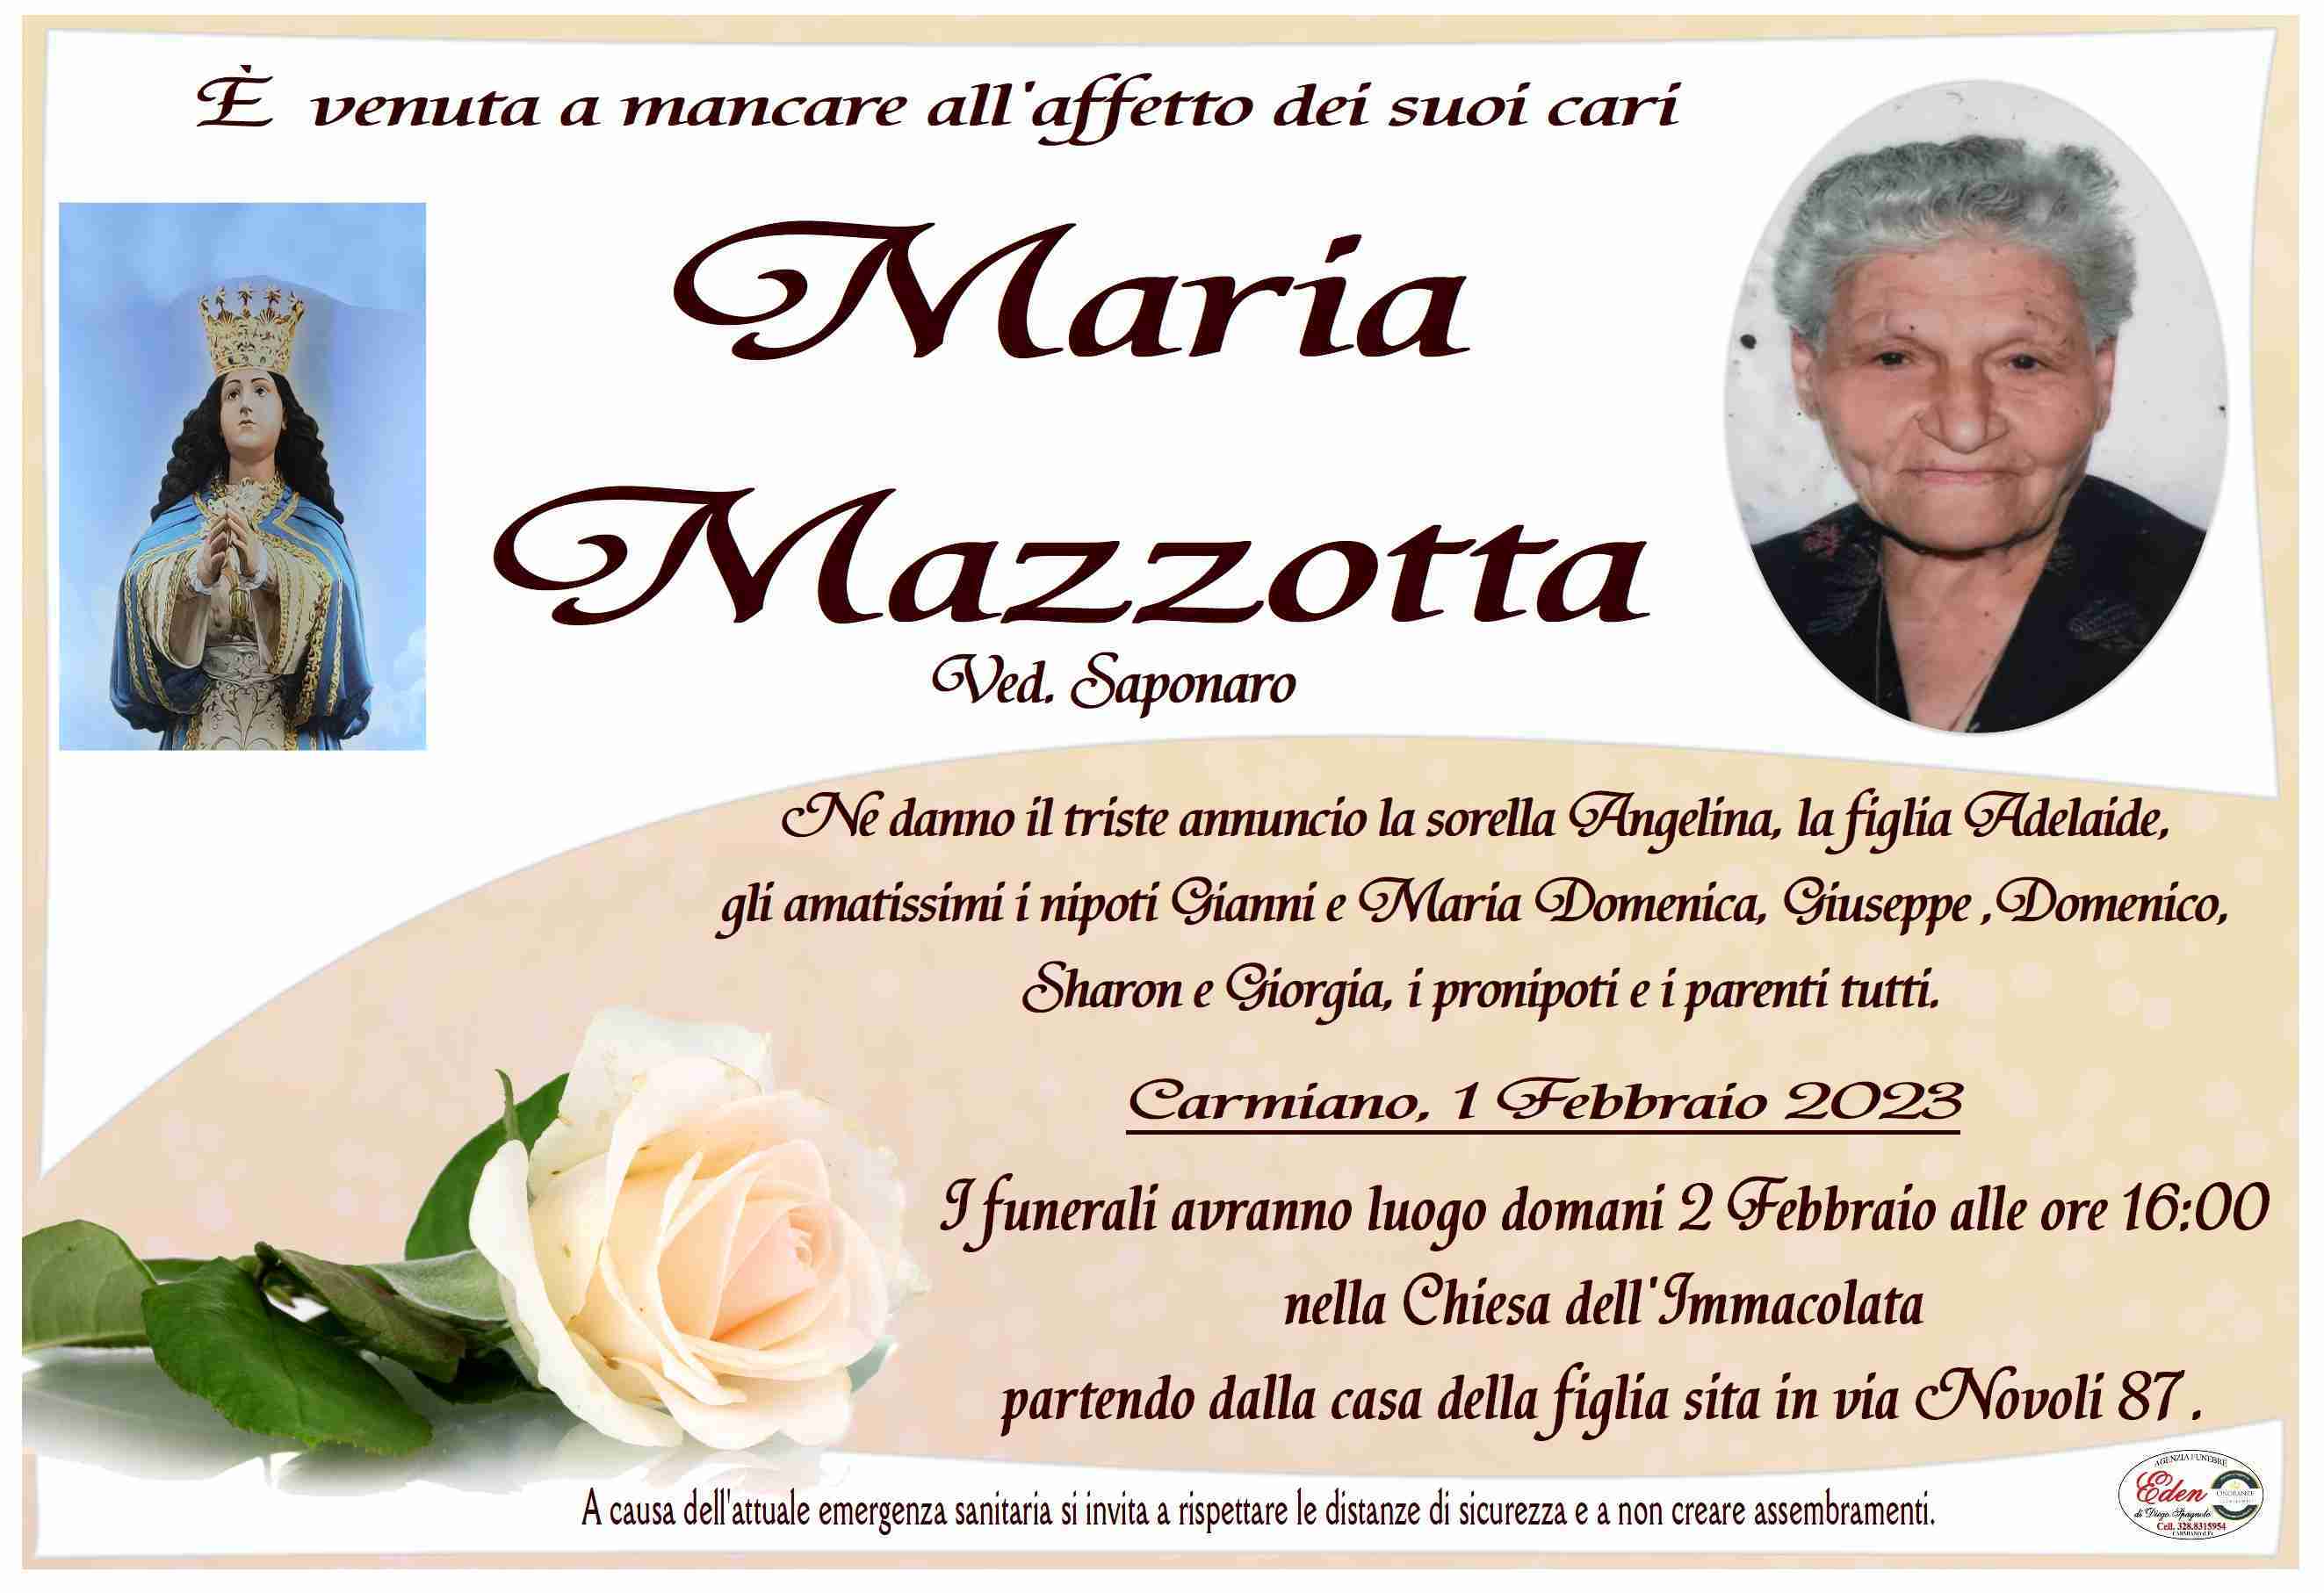 Maria Mazzotta